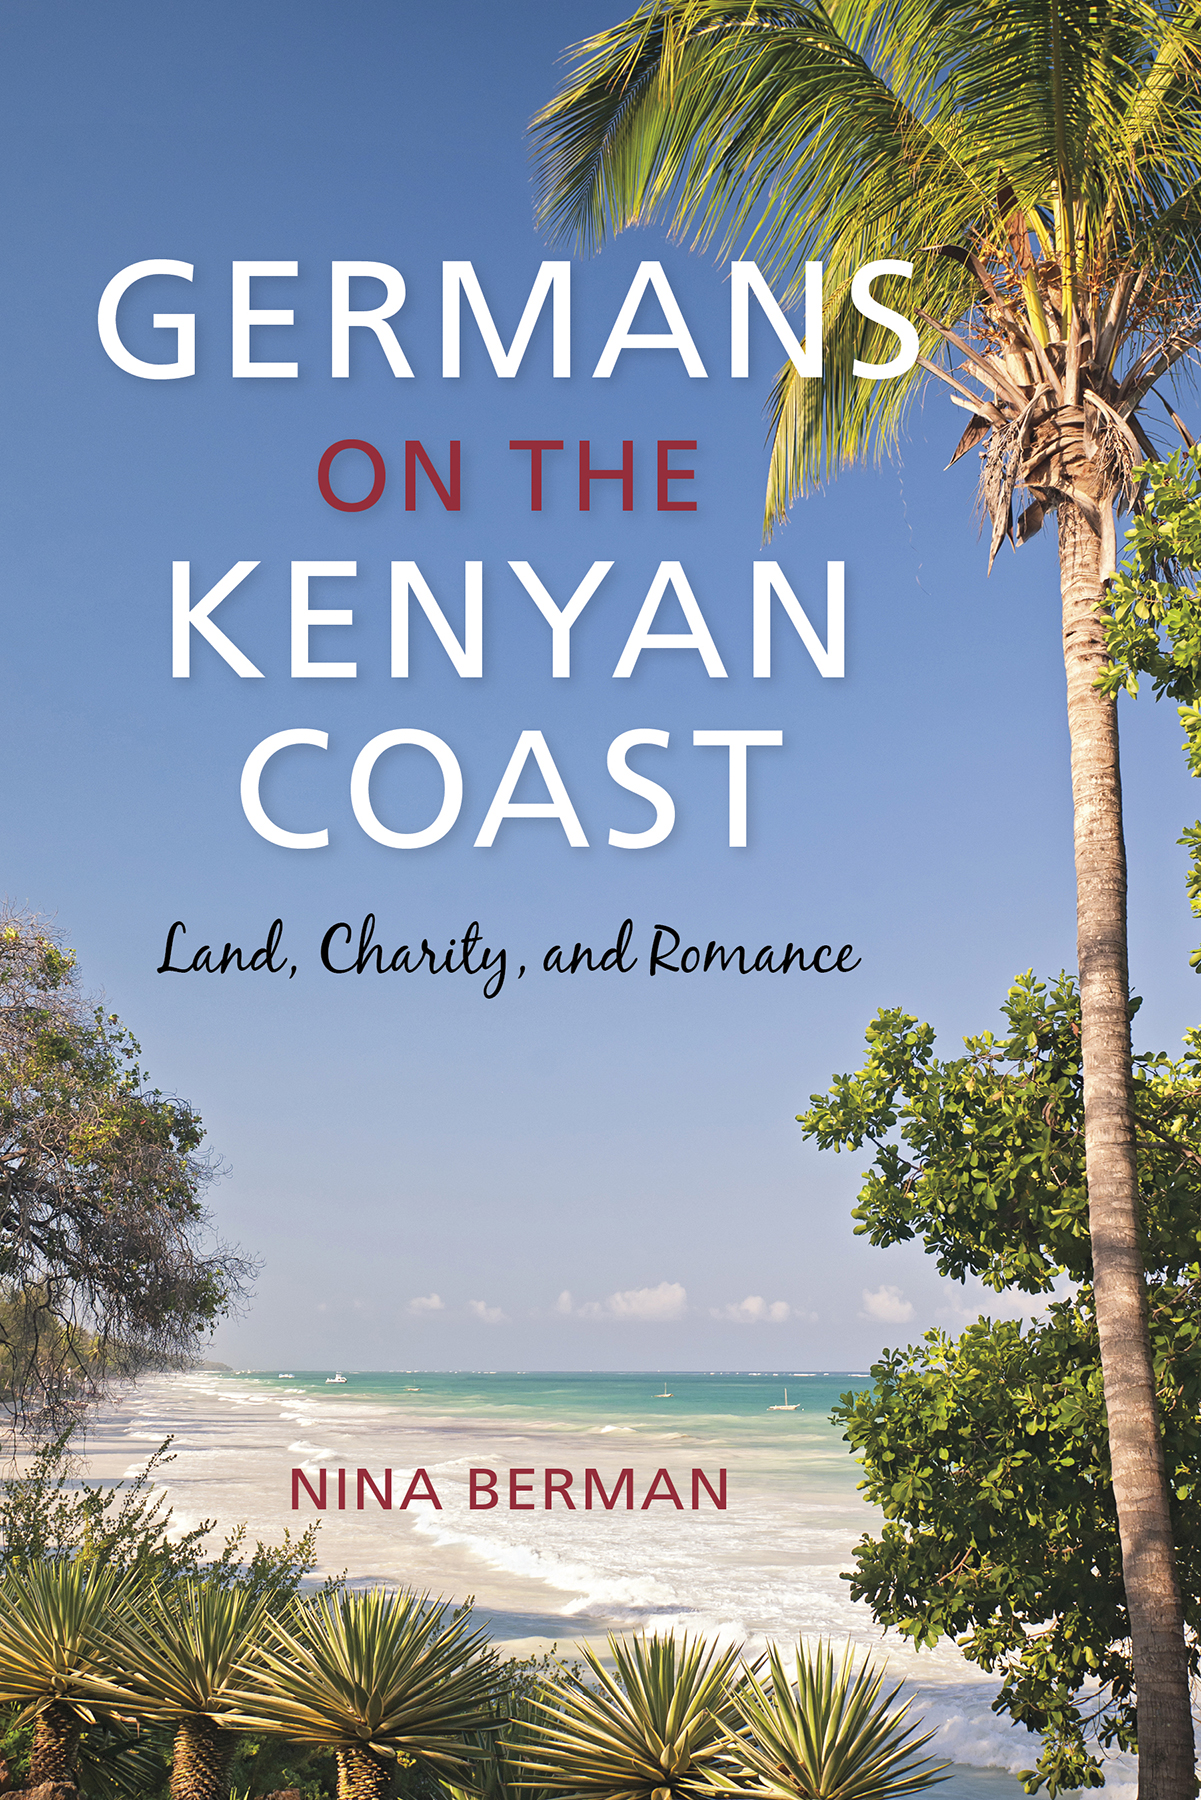 Humanities at Work Brown Bag: Germans on the Kenyan Coast